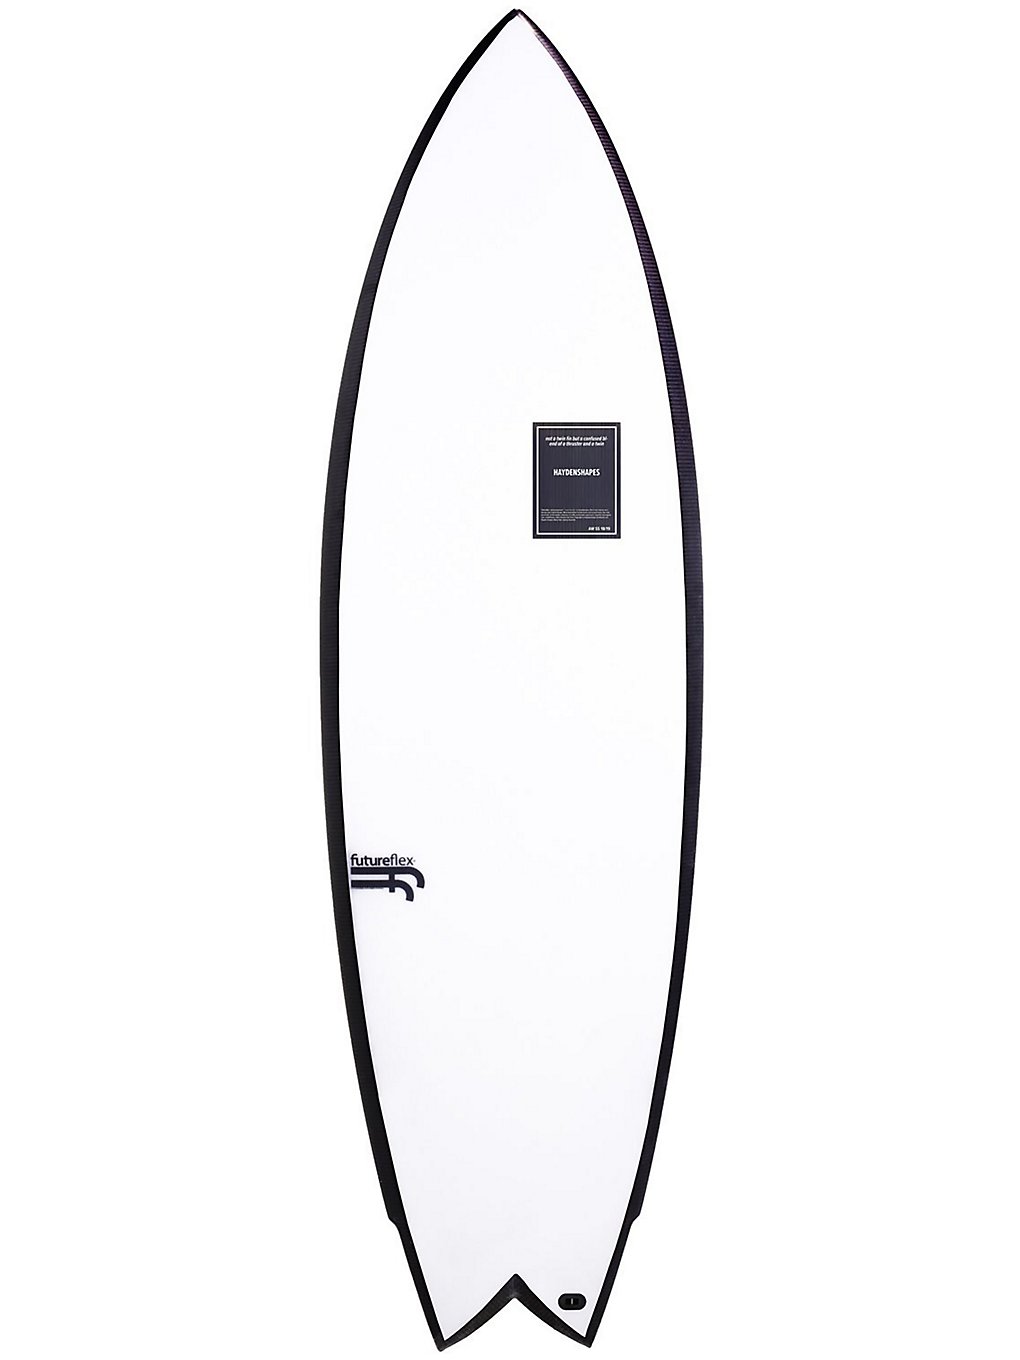 Haydenshapes Misc Future Flex Futures 5'9 Surfboard model logo